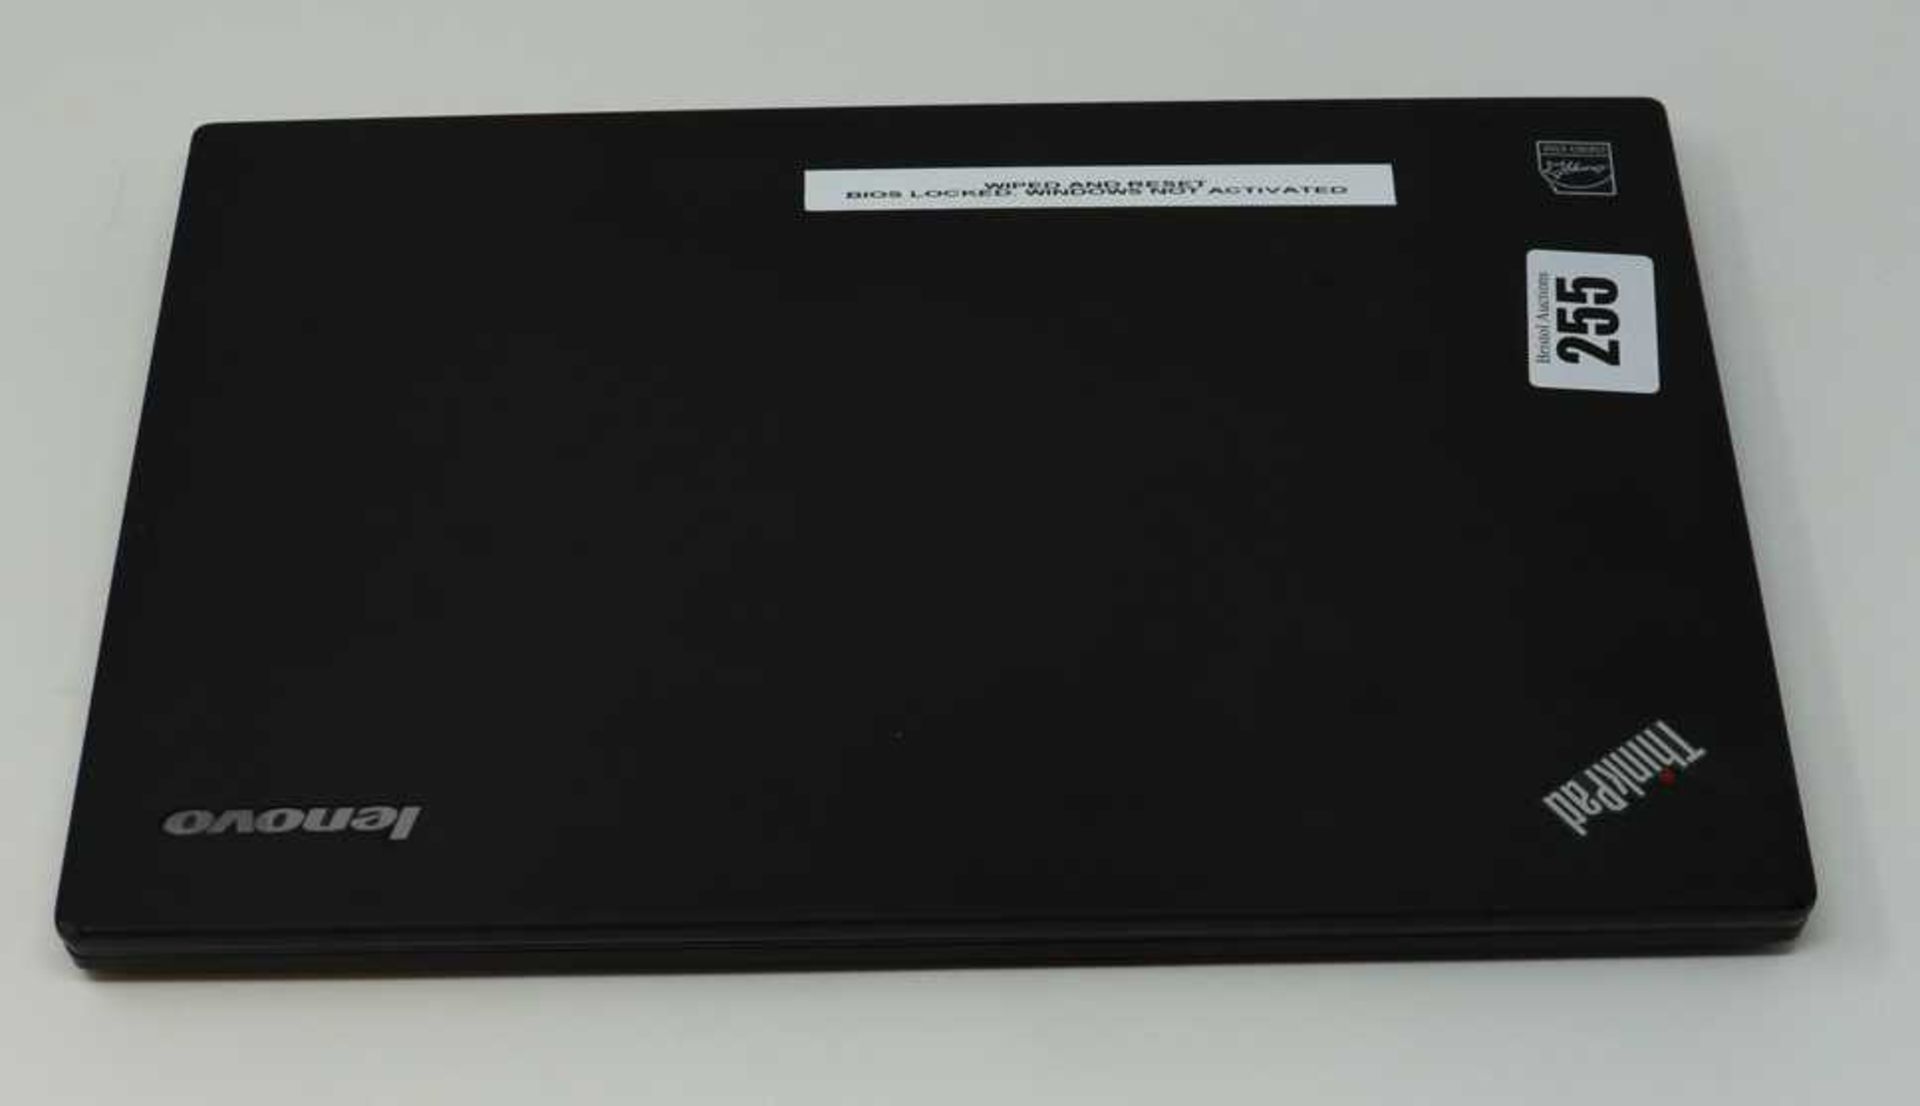 A pre-owned Lenovo Thinkpad X250 Ultrabook 12.5" Intel Core i5-5300U CPU 2.30GHz 8GB RAM 256 SSD - Image 2 of 2